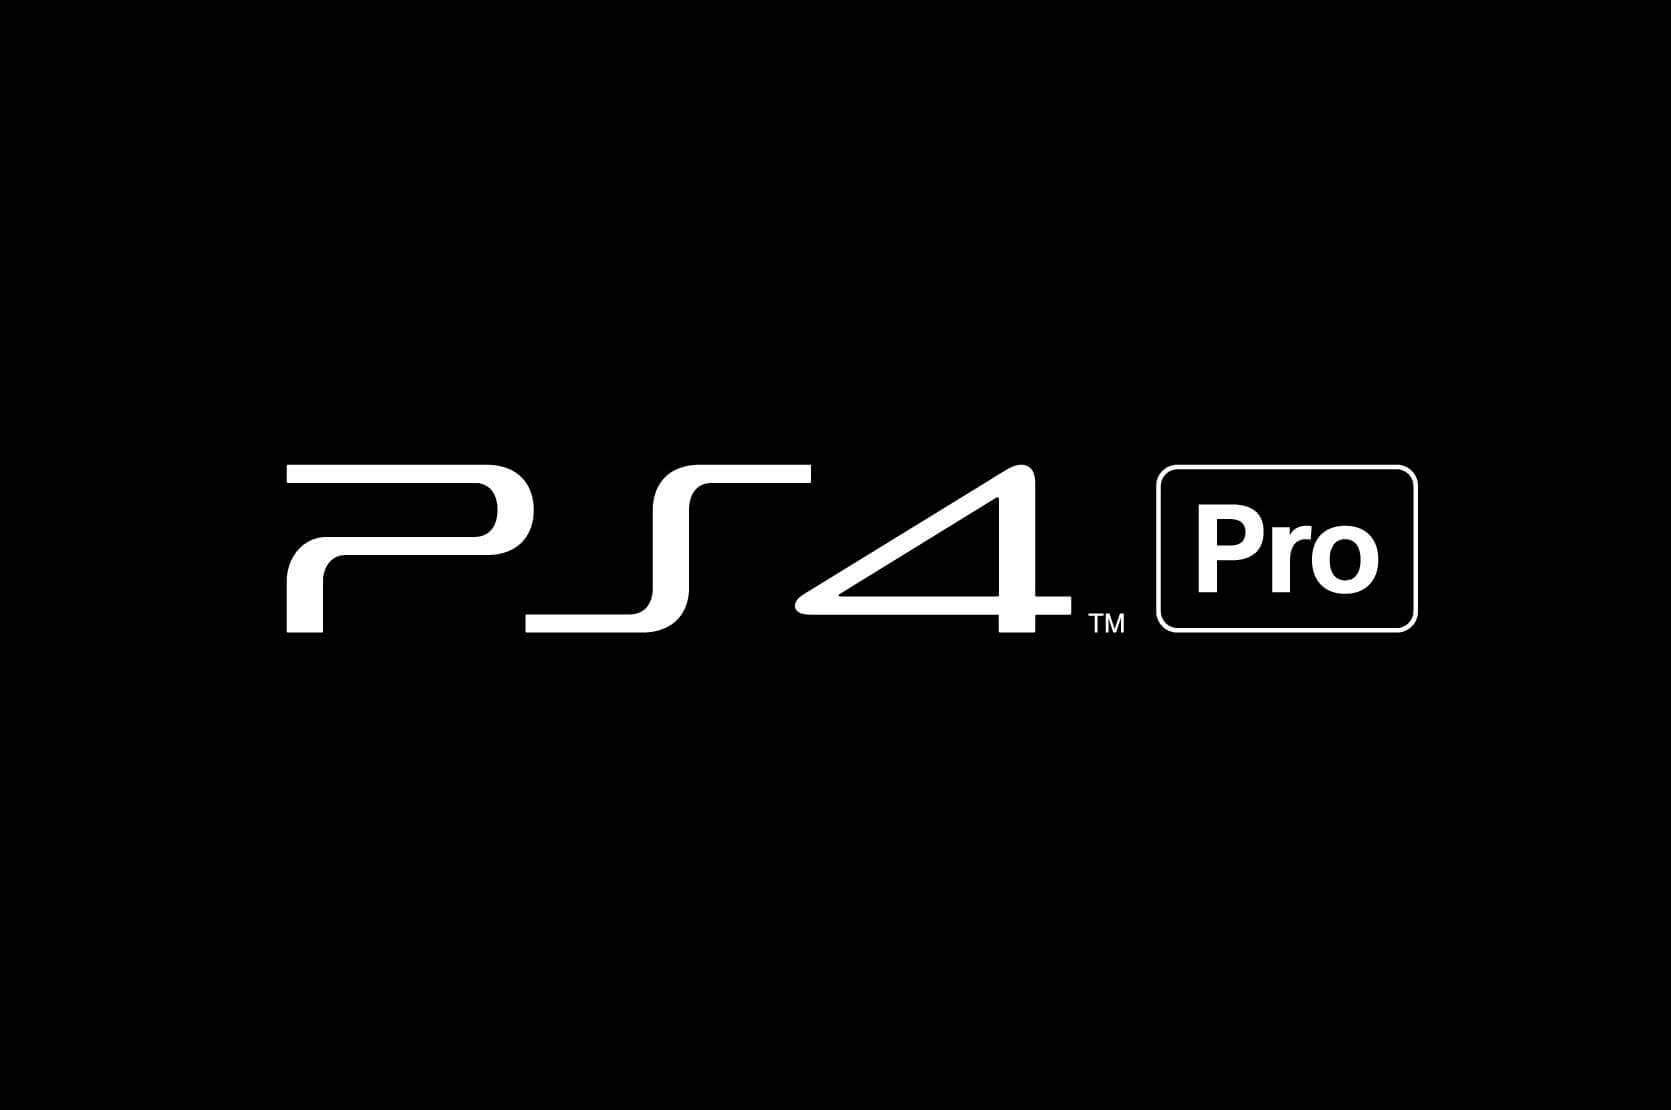 Playstation youtube. Sony PLAYSTATION 4 logo. Sony 4 Pro лого. PLAYSTATION надпись. Ps4 надпись.